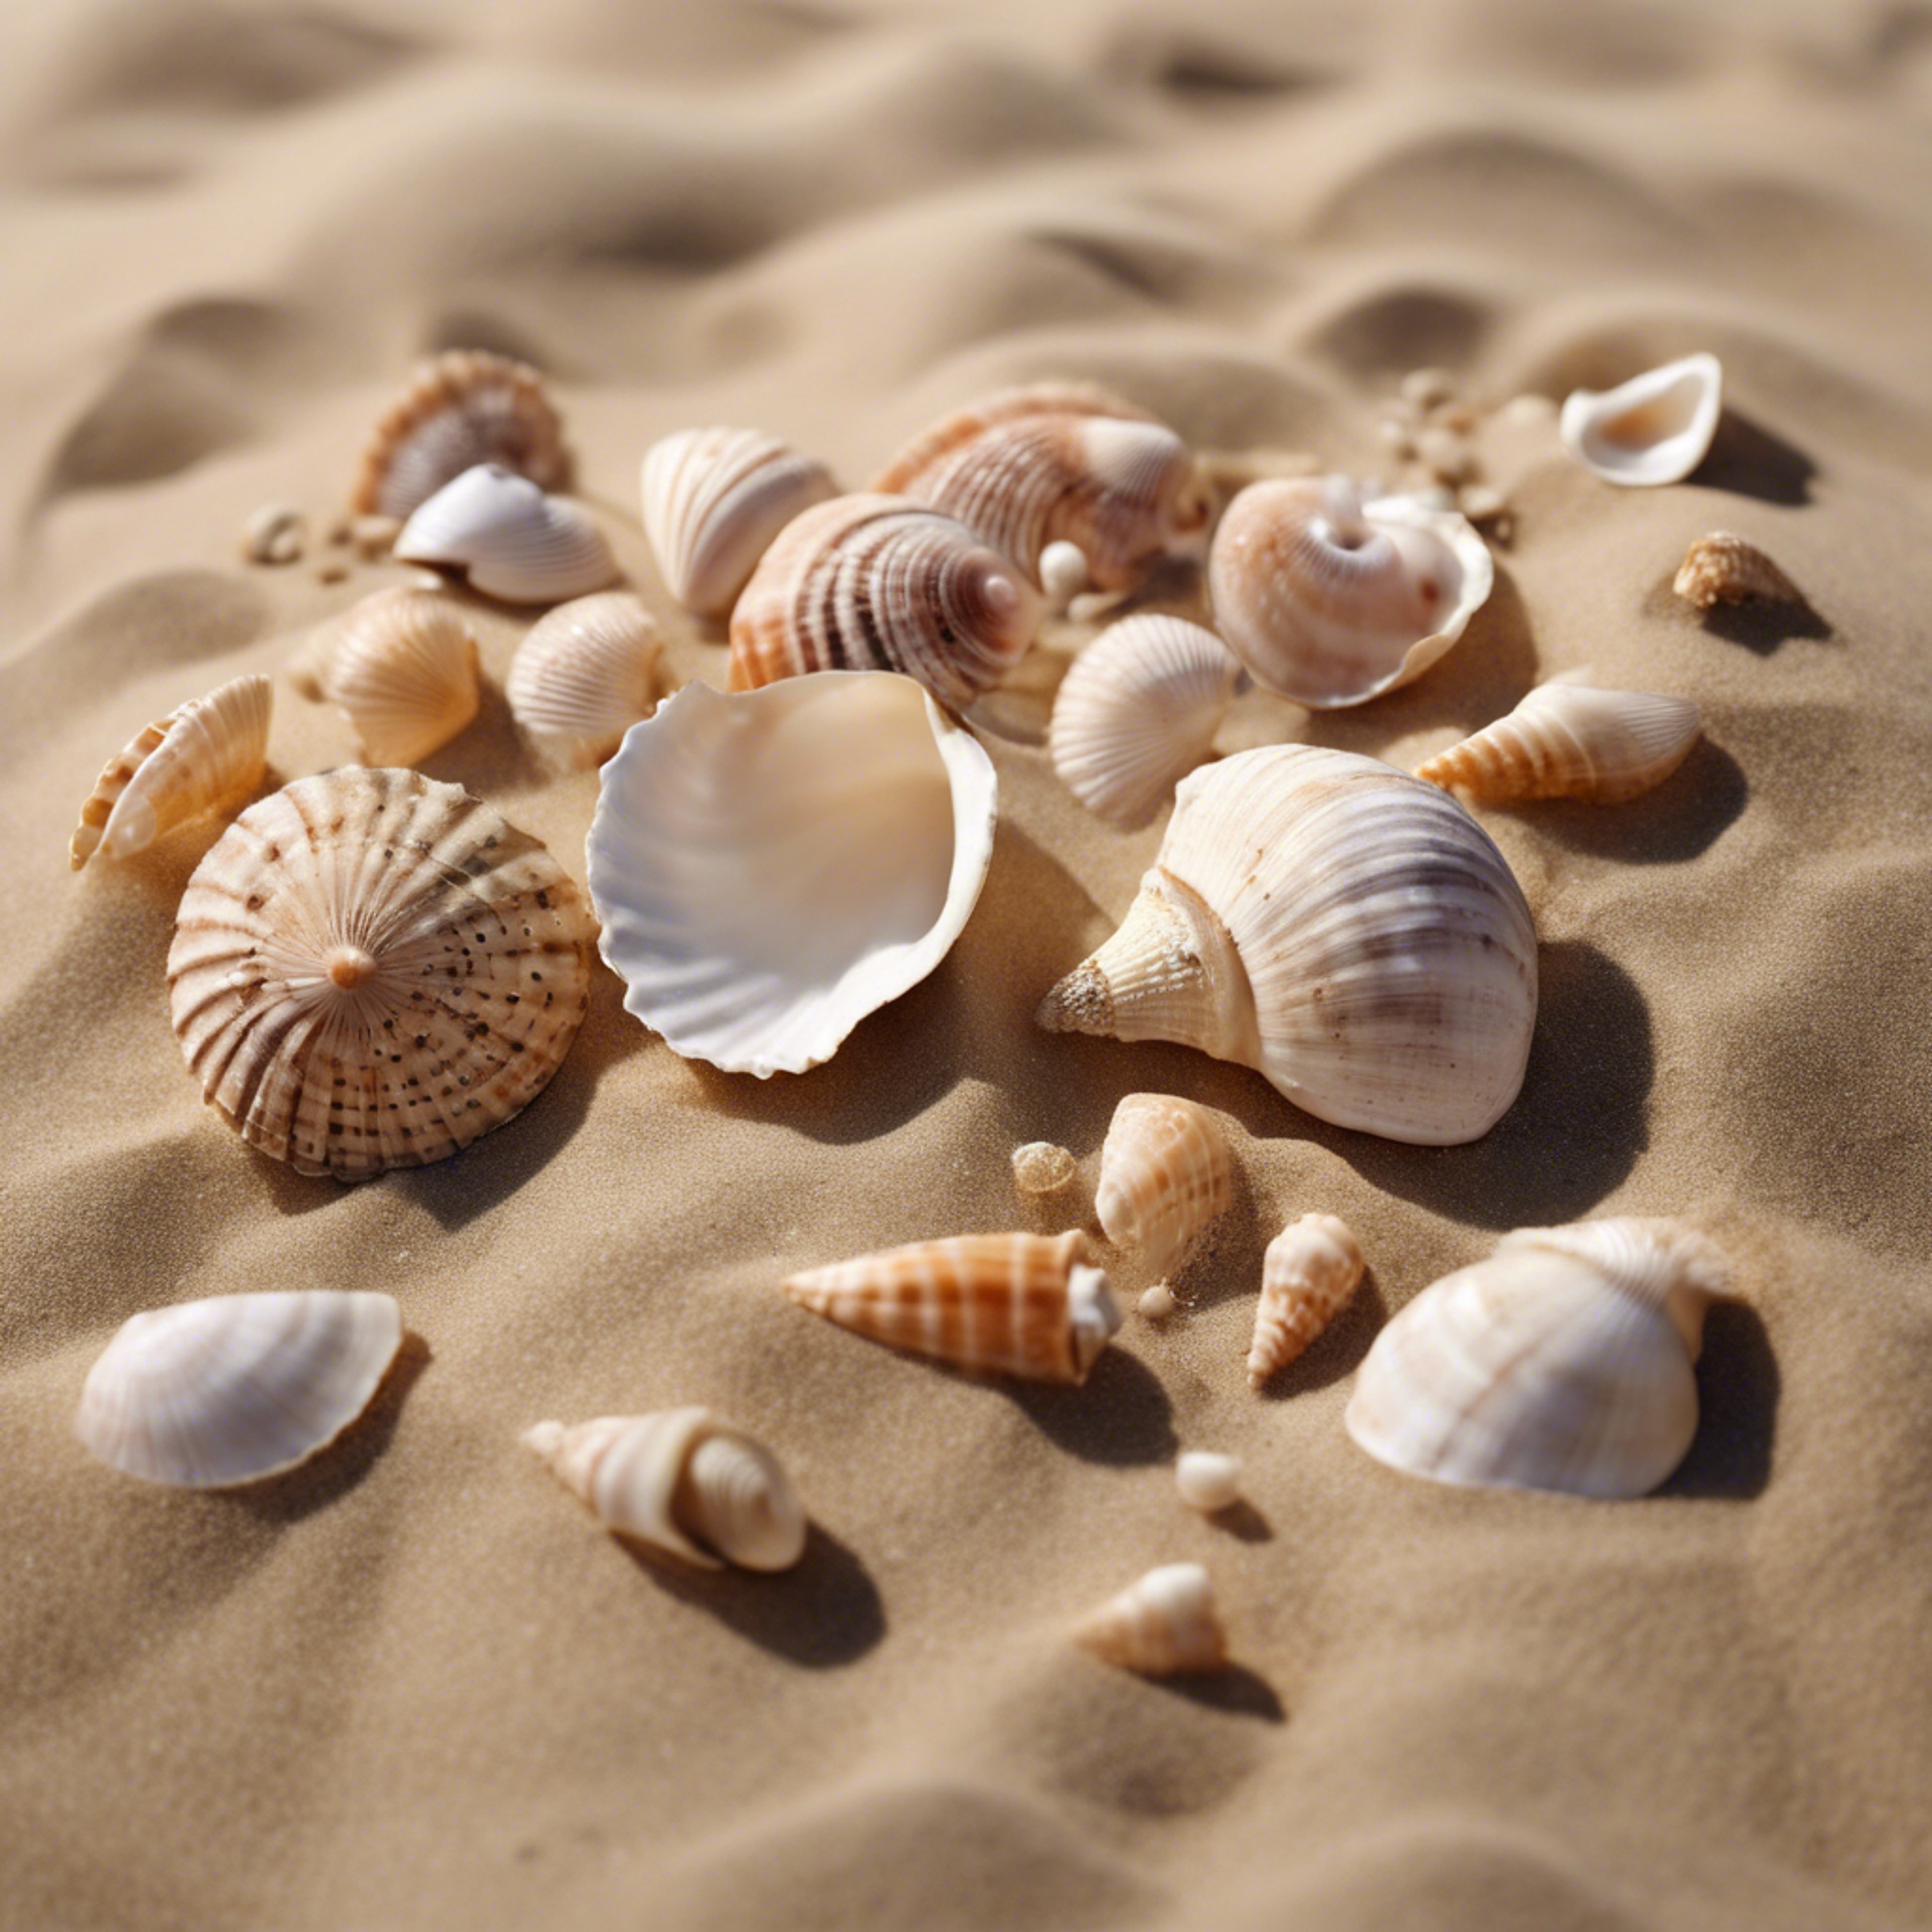 An arrangement of seashells of various sizes in a cool beige sand. Tapeta[d4509fc1f43d45f6bba6]